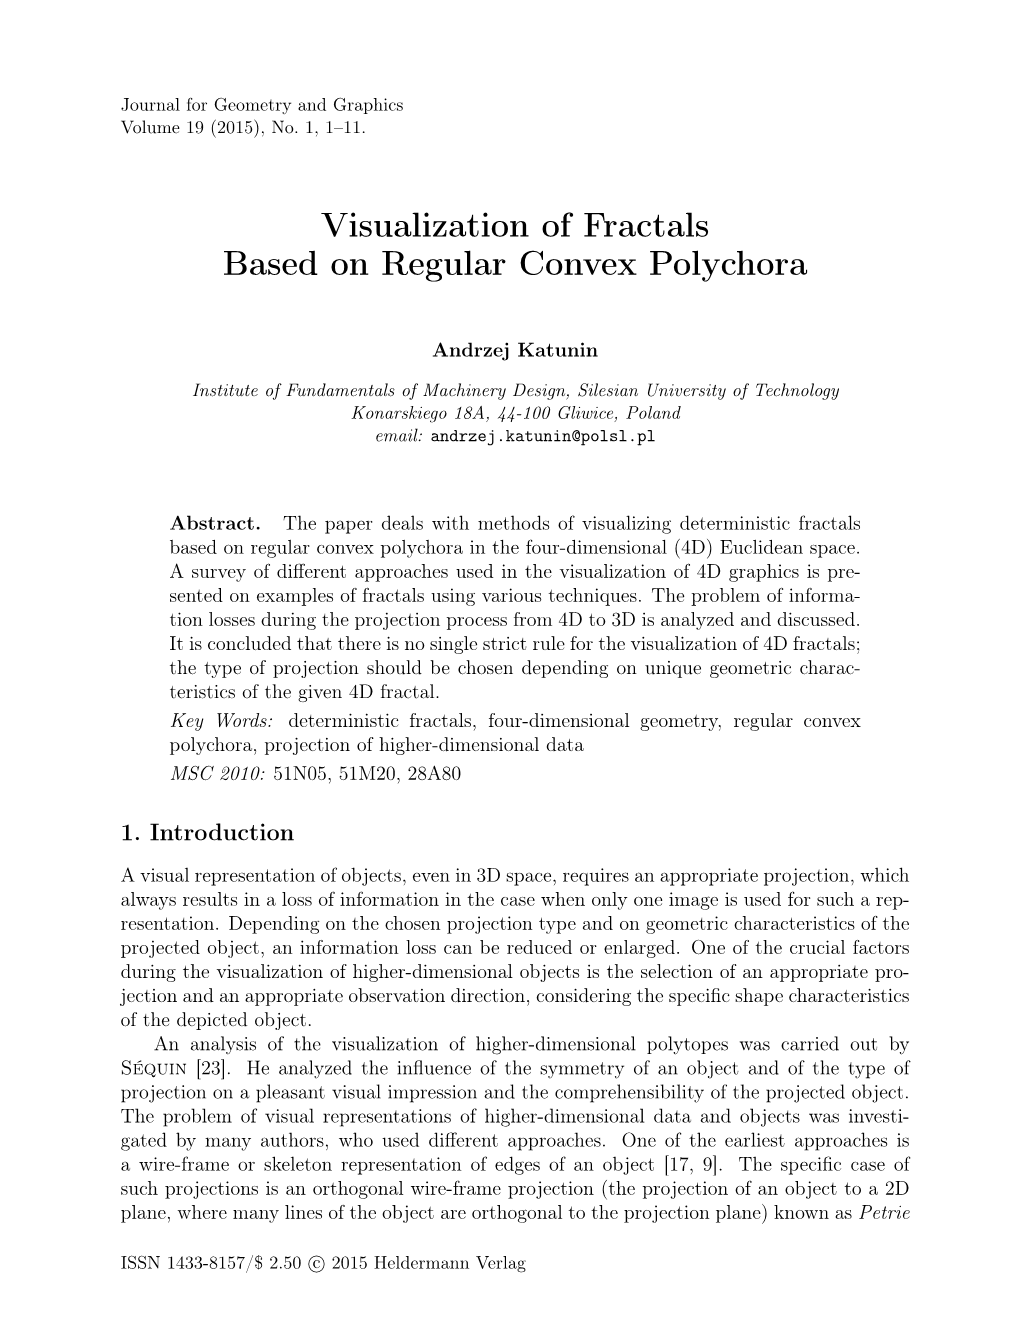 Visualization of Fractals Based on Regular Convex Polychora